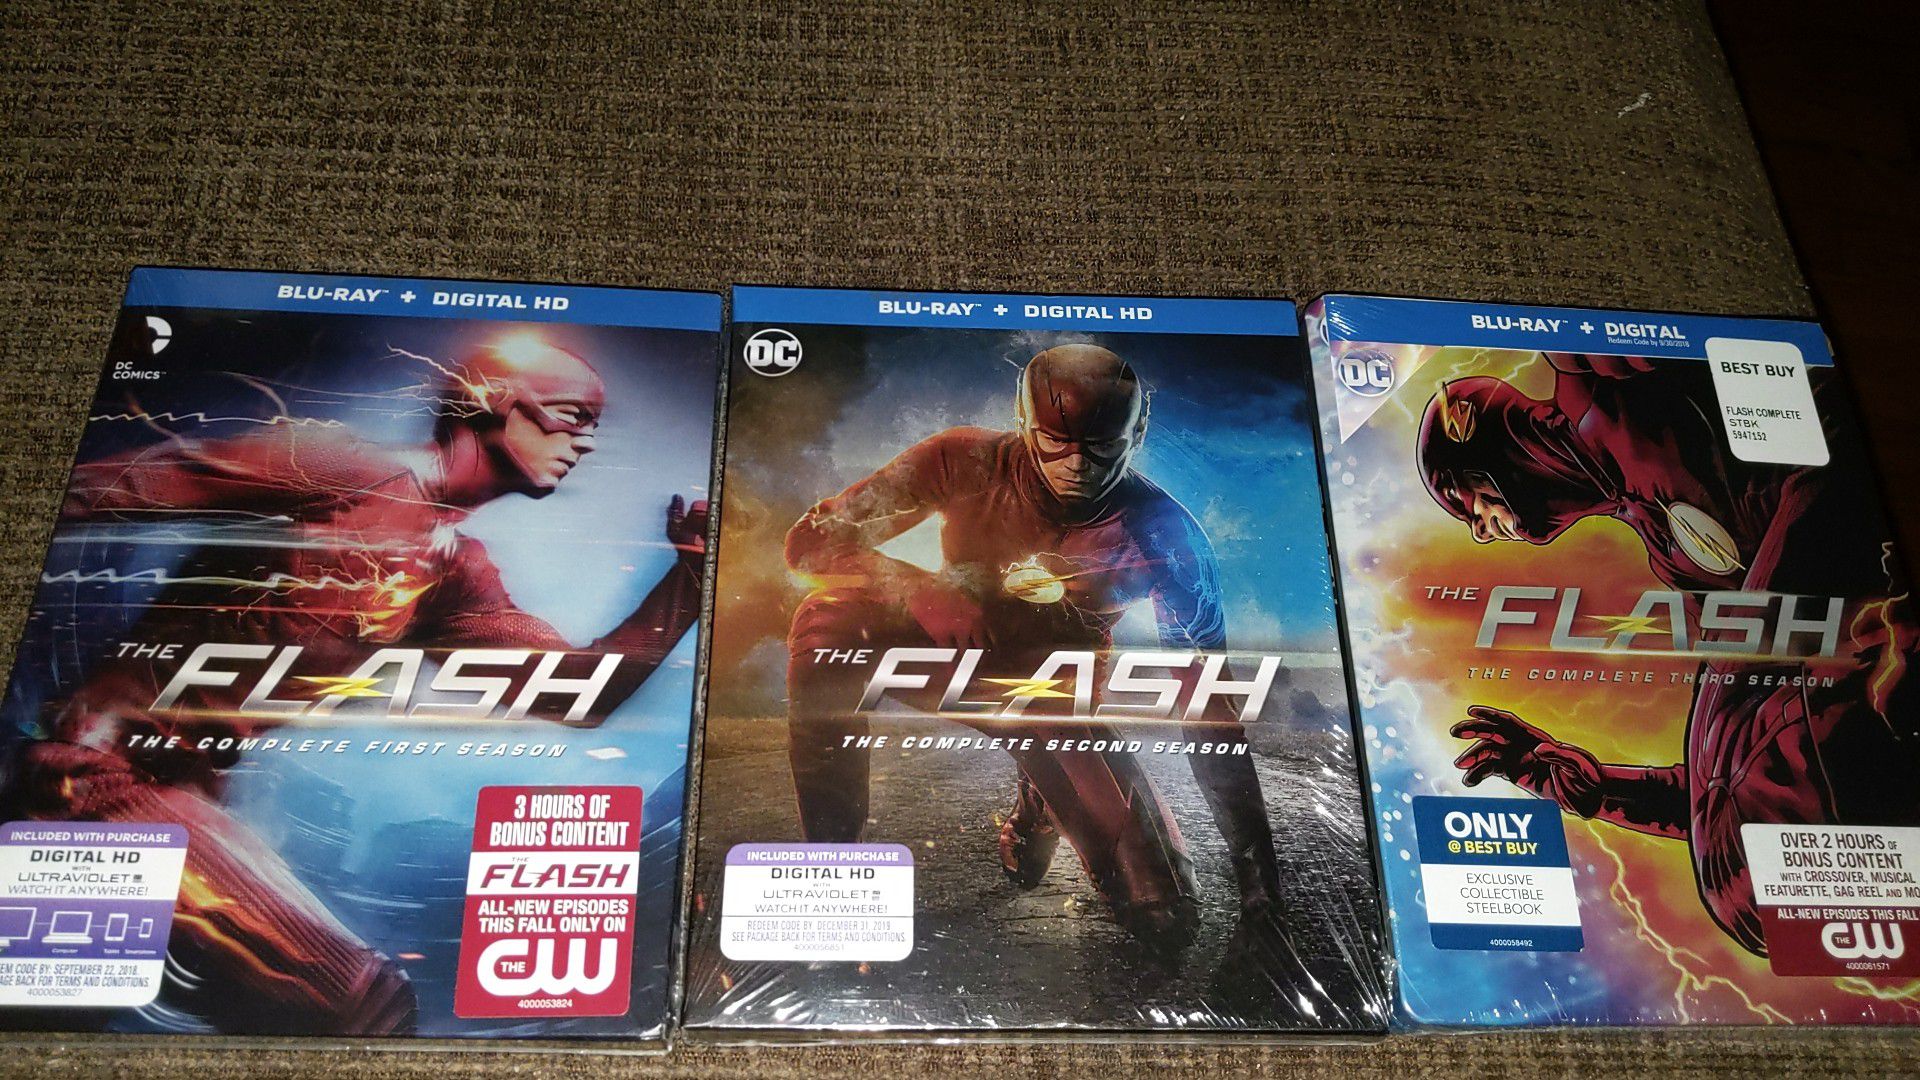 The flash seasons 1-3 season 3 steelbook edition